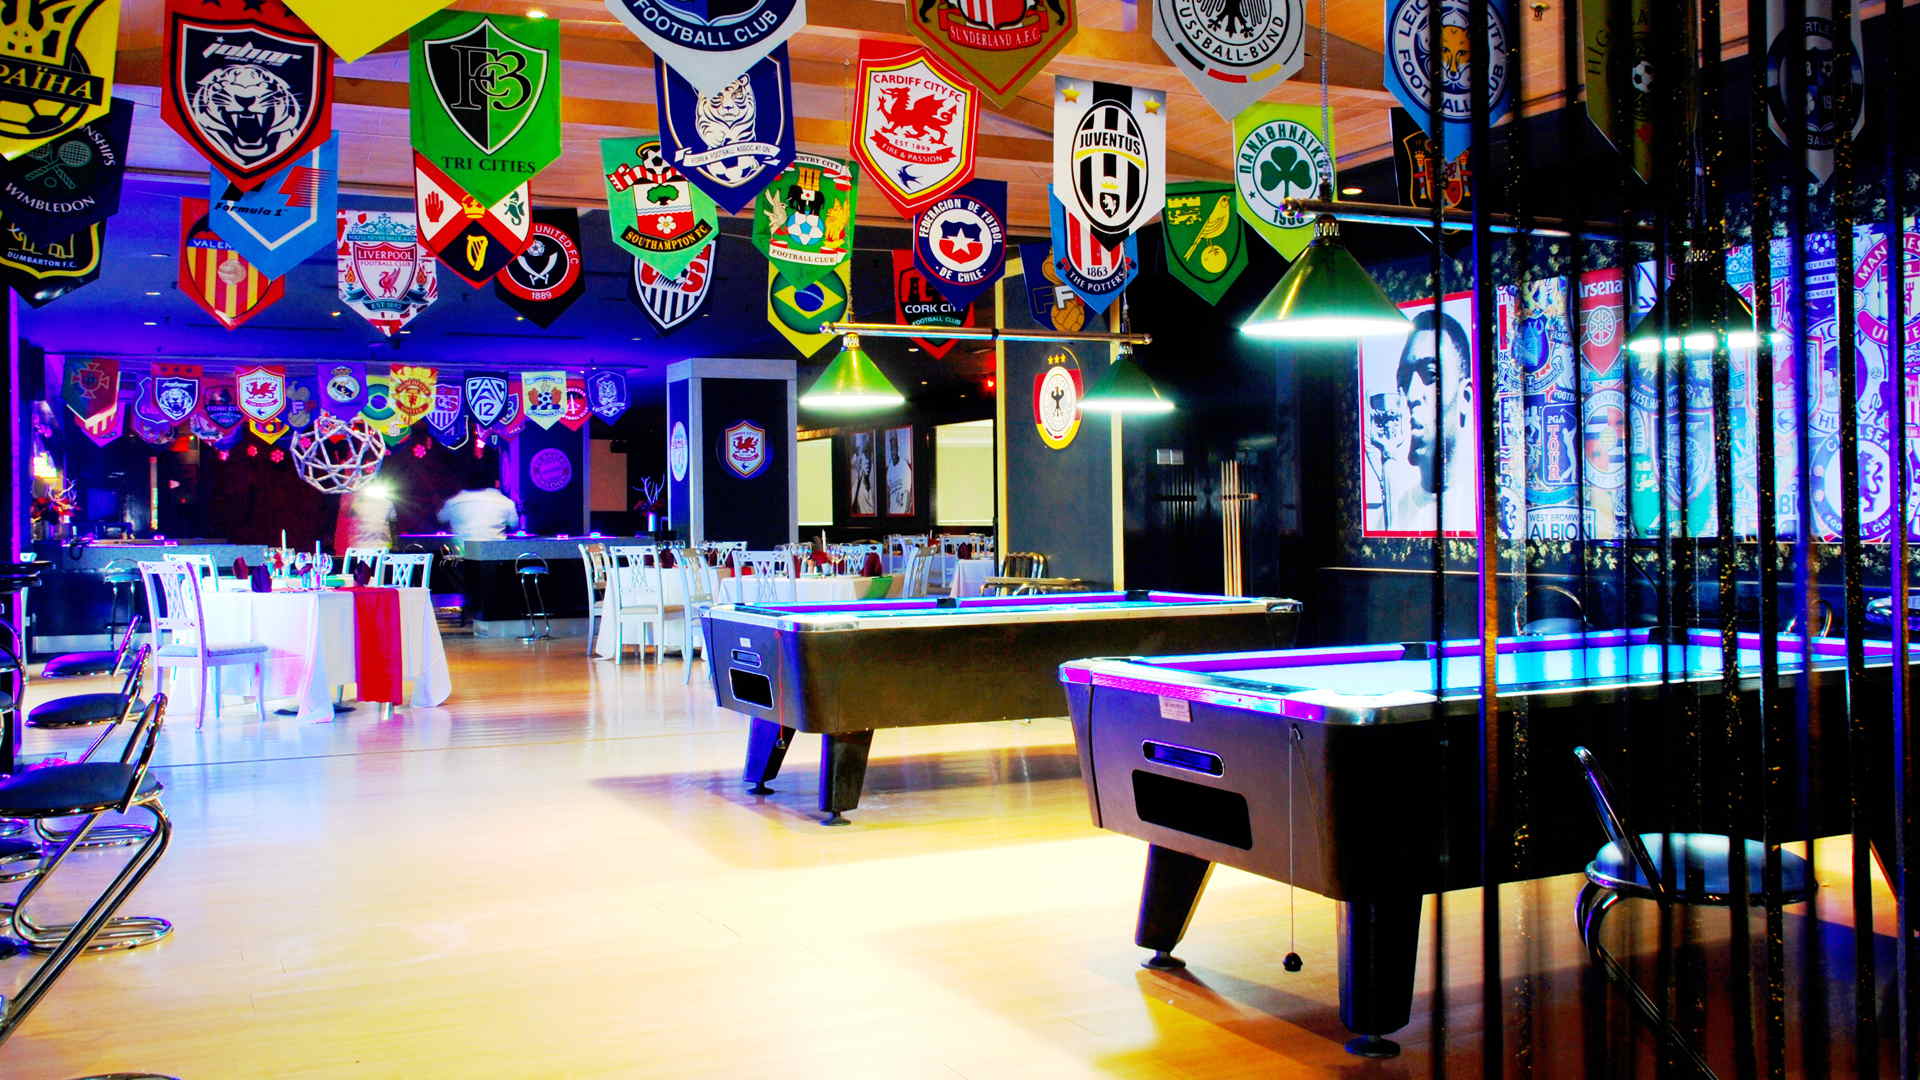 Johor Bahru Hotel Bar | The Club | Sports Bar & Lounge at ...